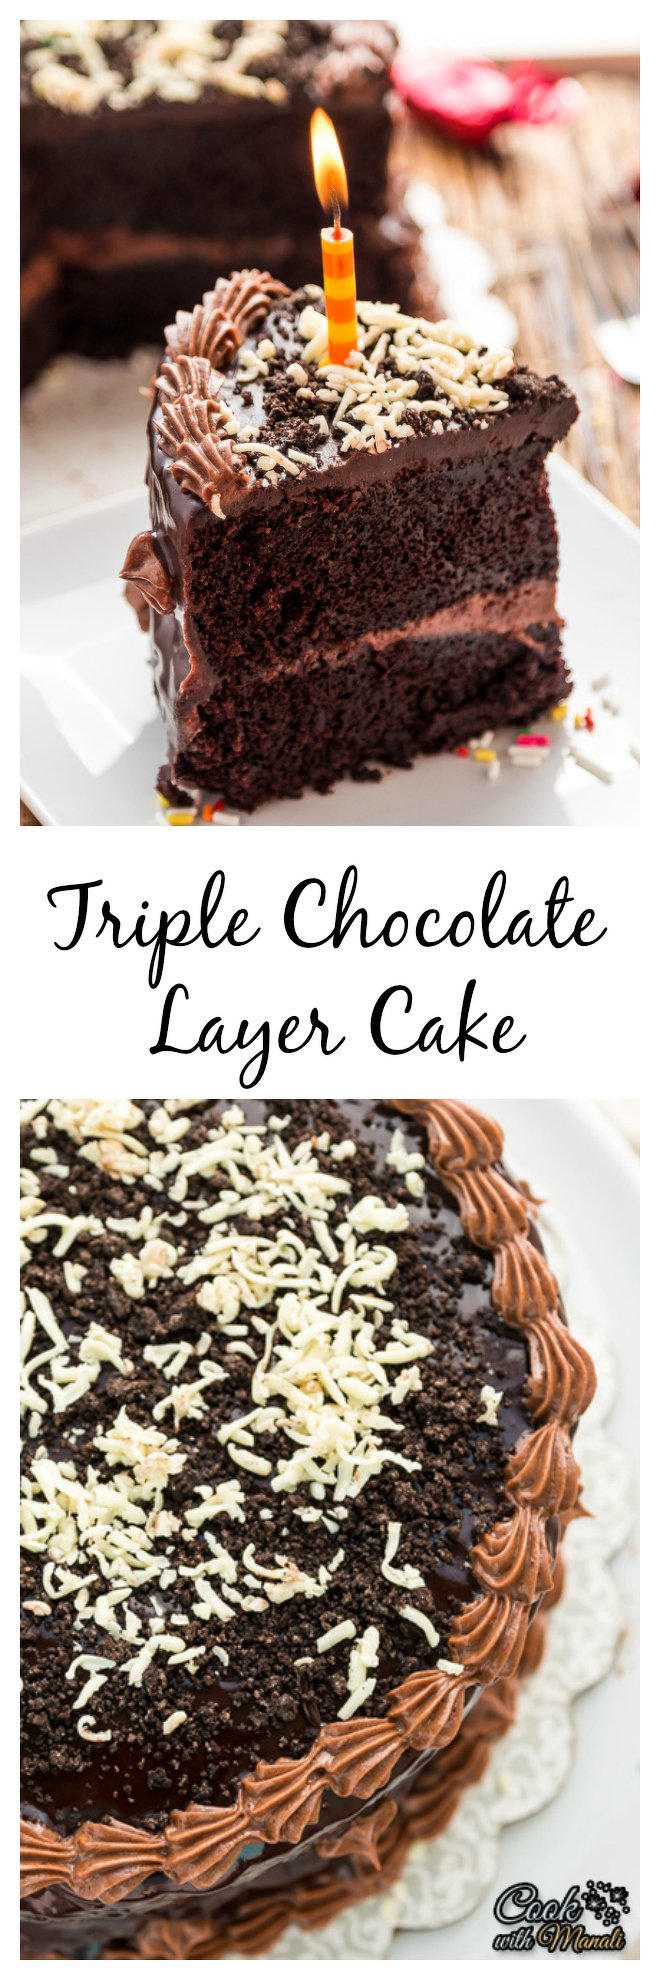 Triple Chocolate Layer Cake Collage-nocwm